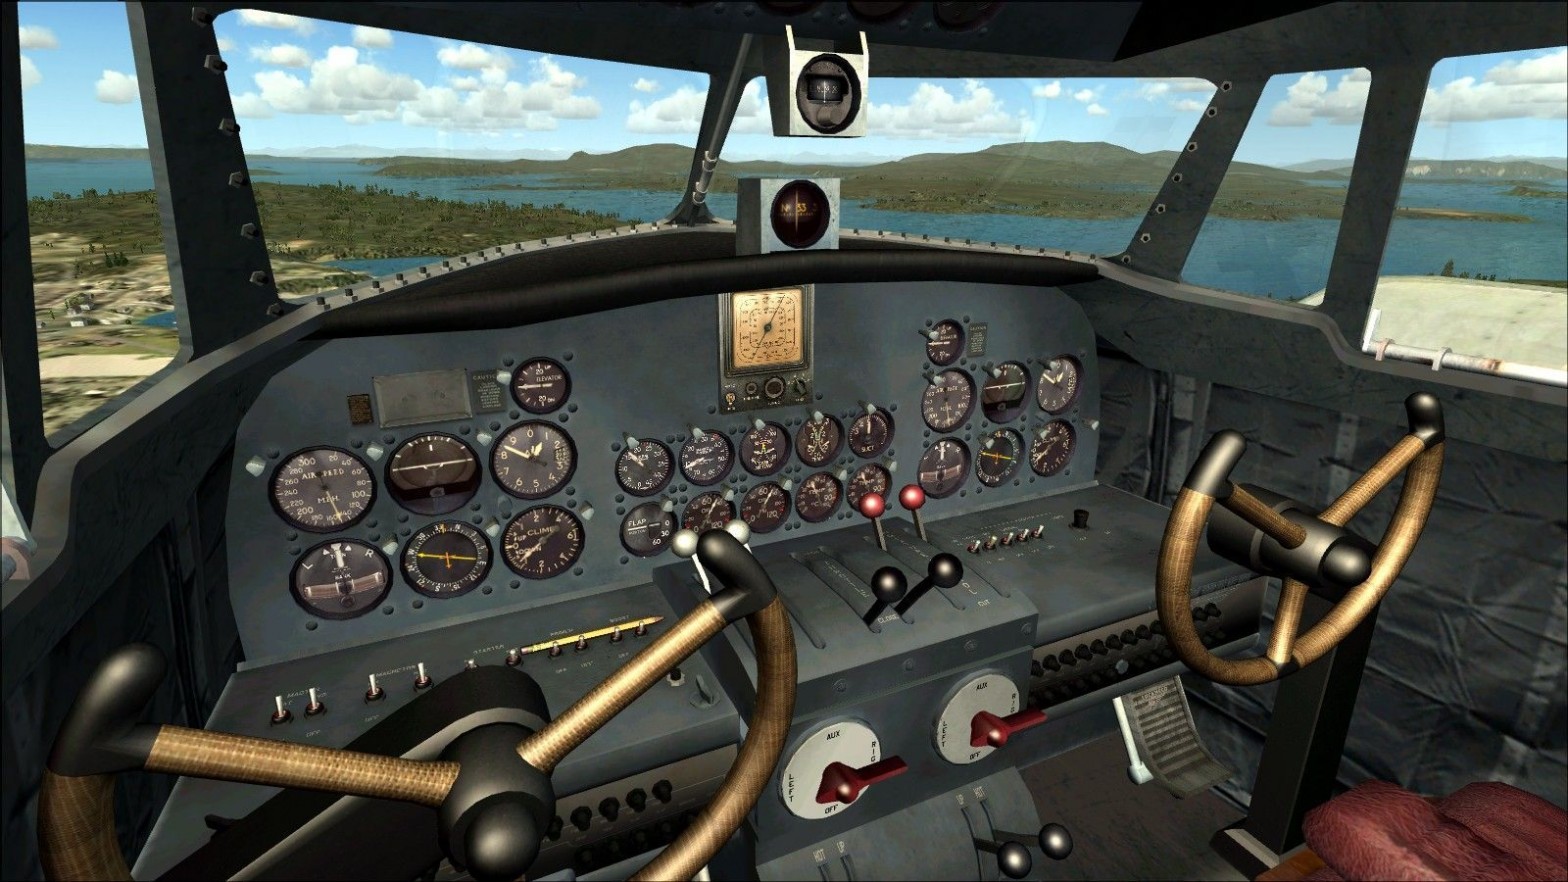 microsoft flight simulator x gold edition requirements